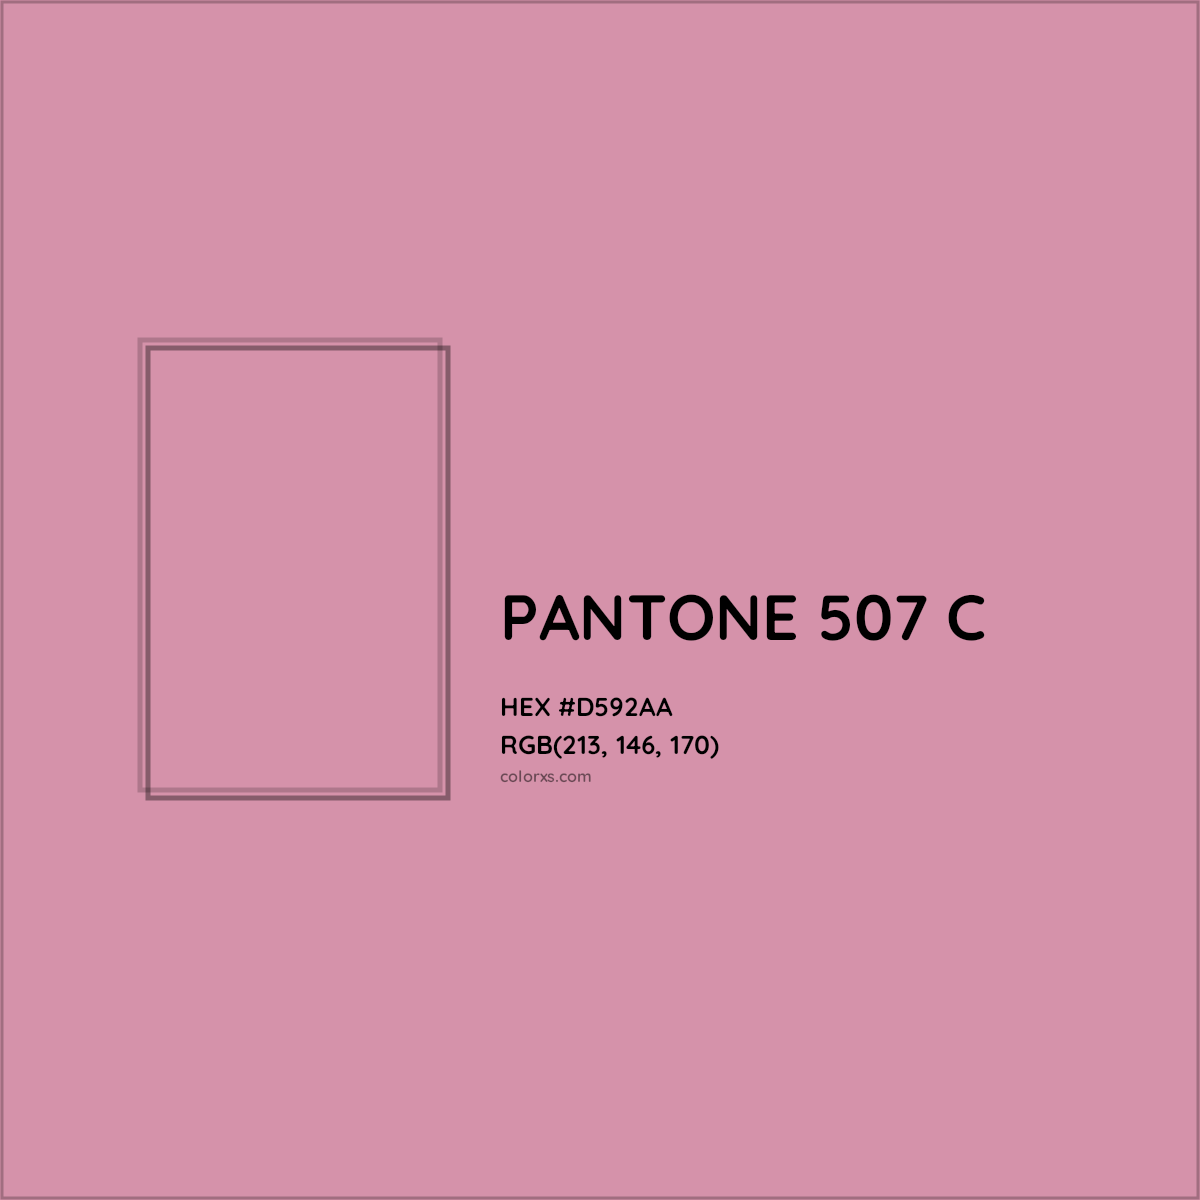 HEX #D592AA PANTONE 507 C CMS Pantone PMS - Color Code